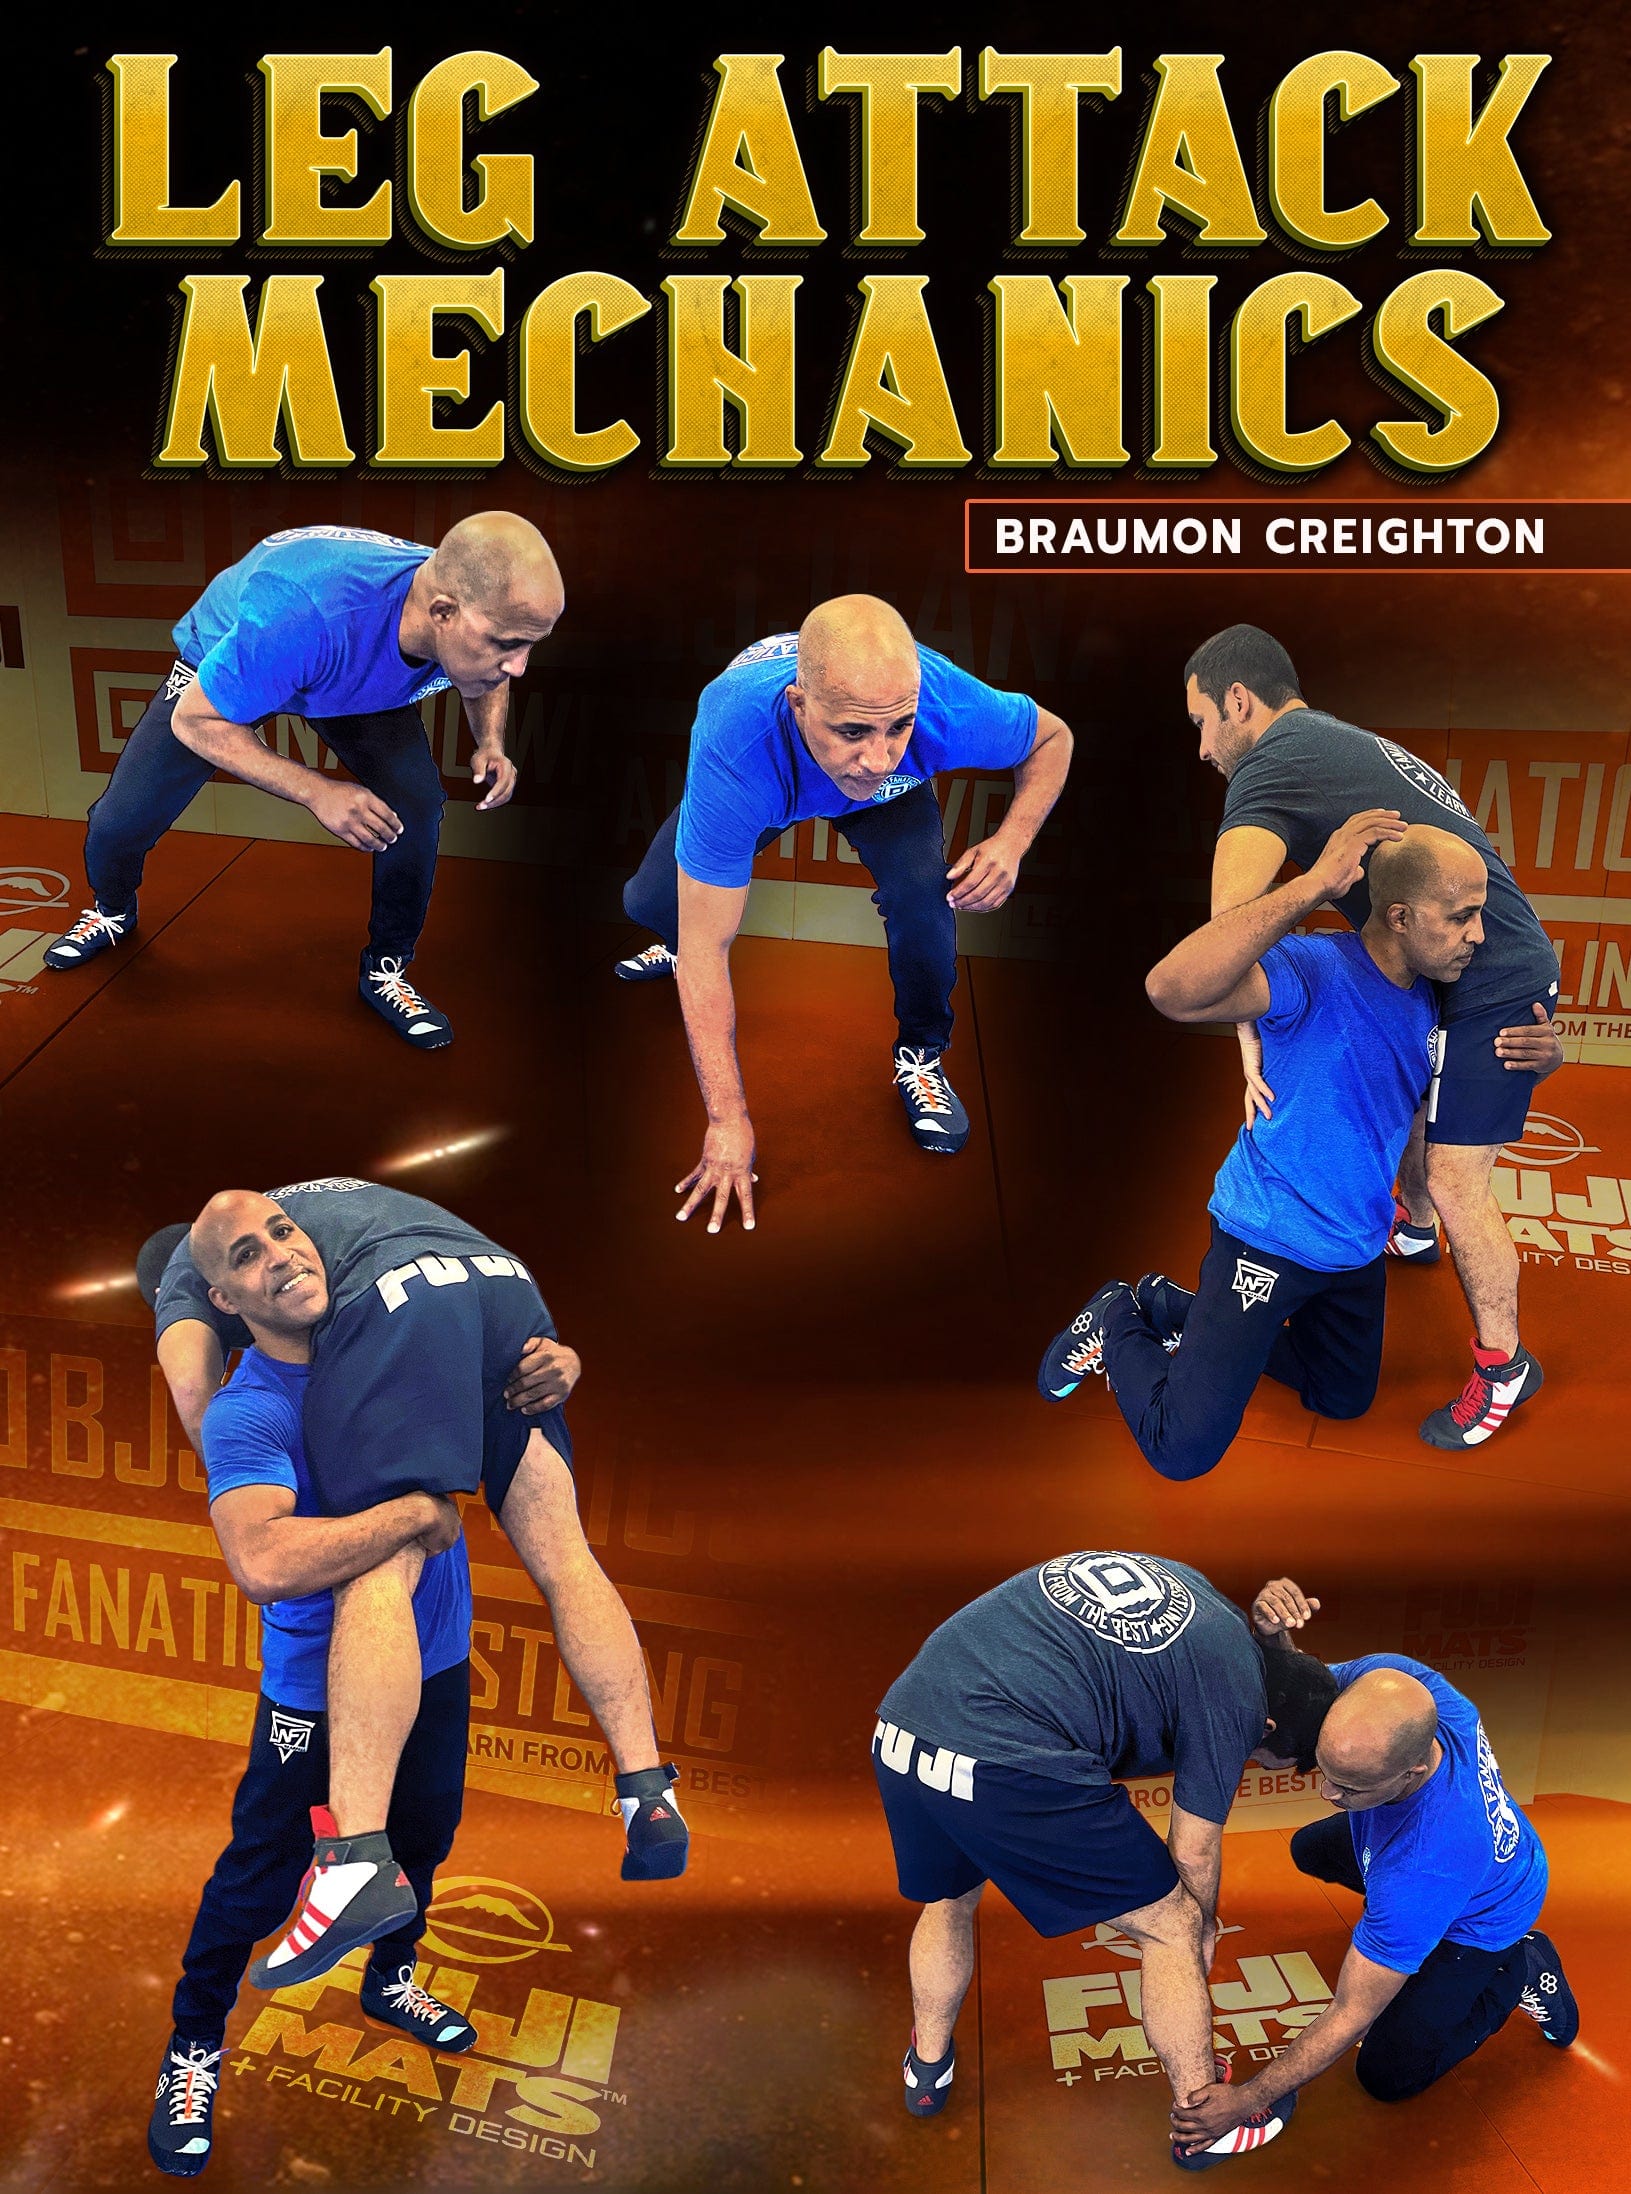 Leg Attack Mechanics by Braumon Creighton - Fanatic Wrestling